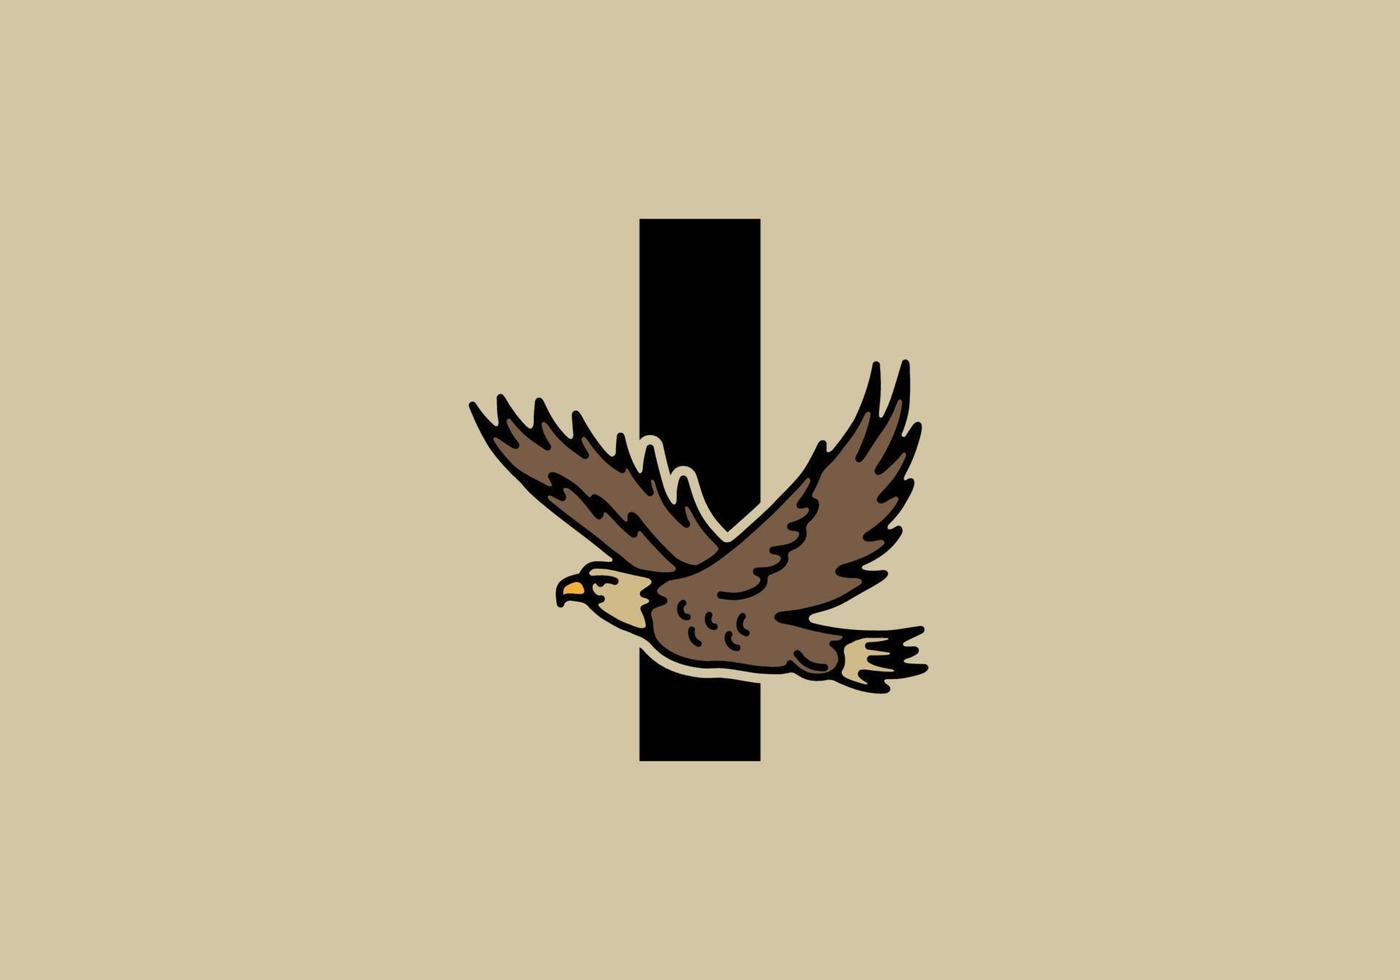 Line art illustration of flying eagle with I initial letter vector